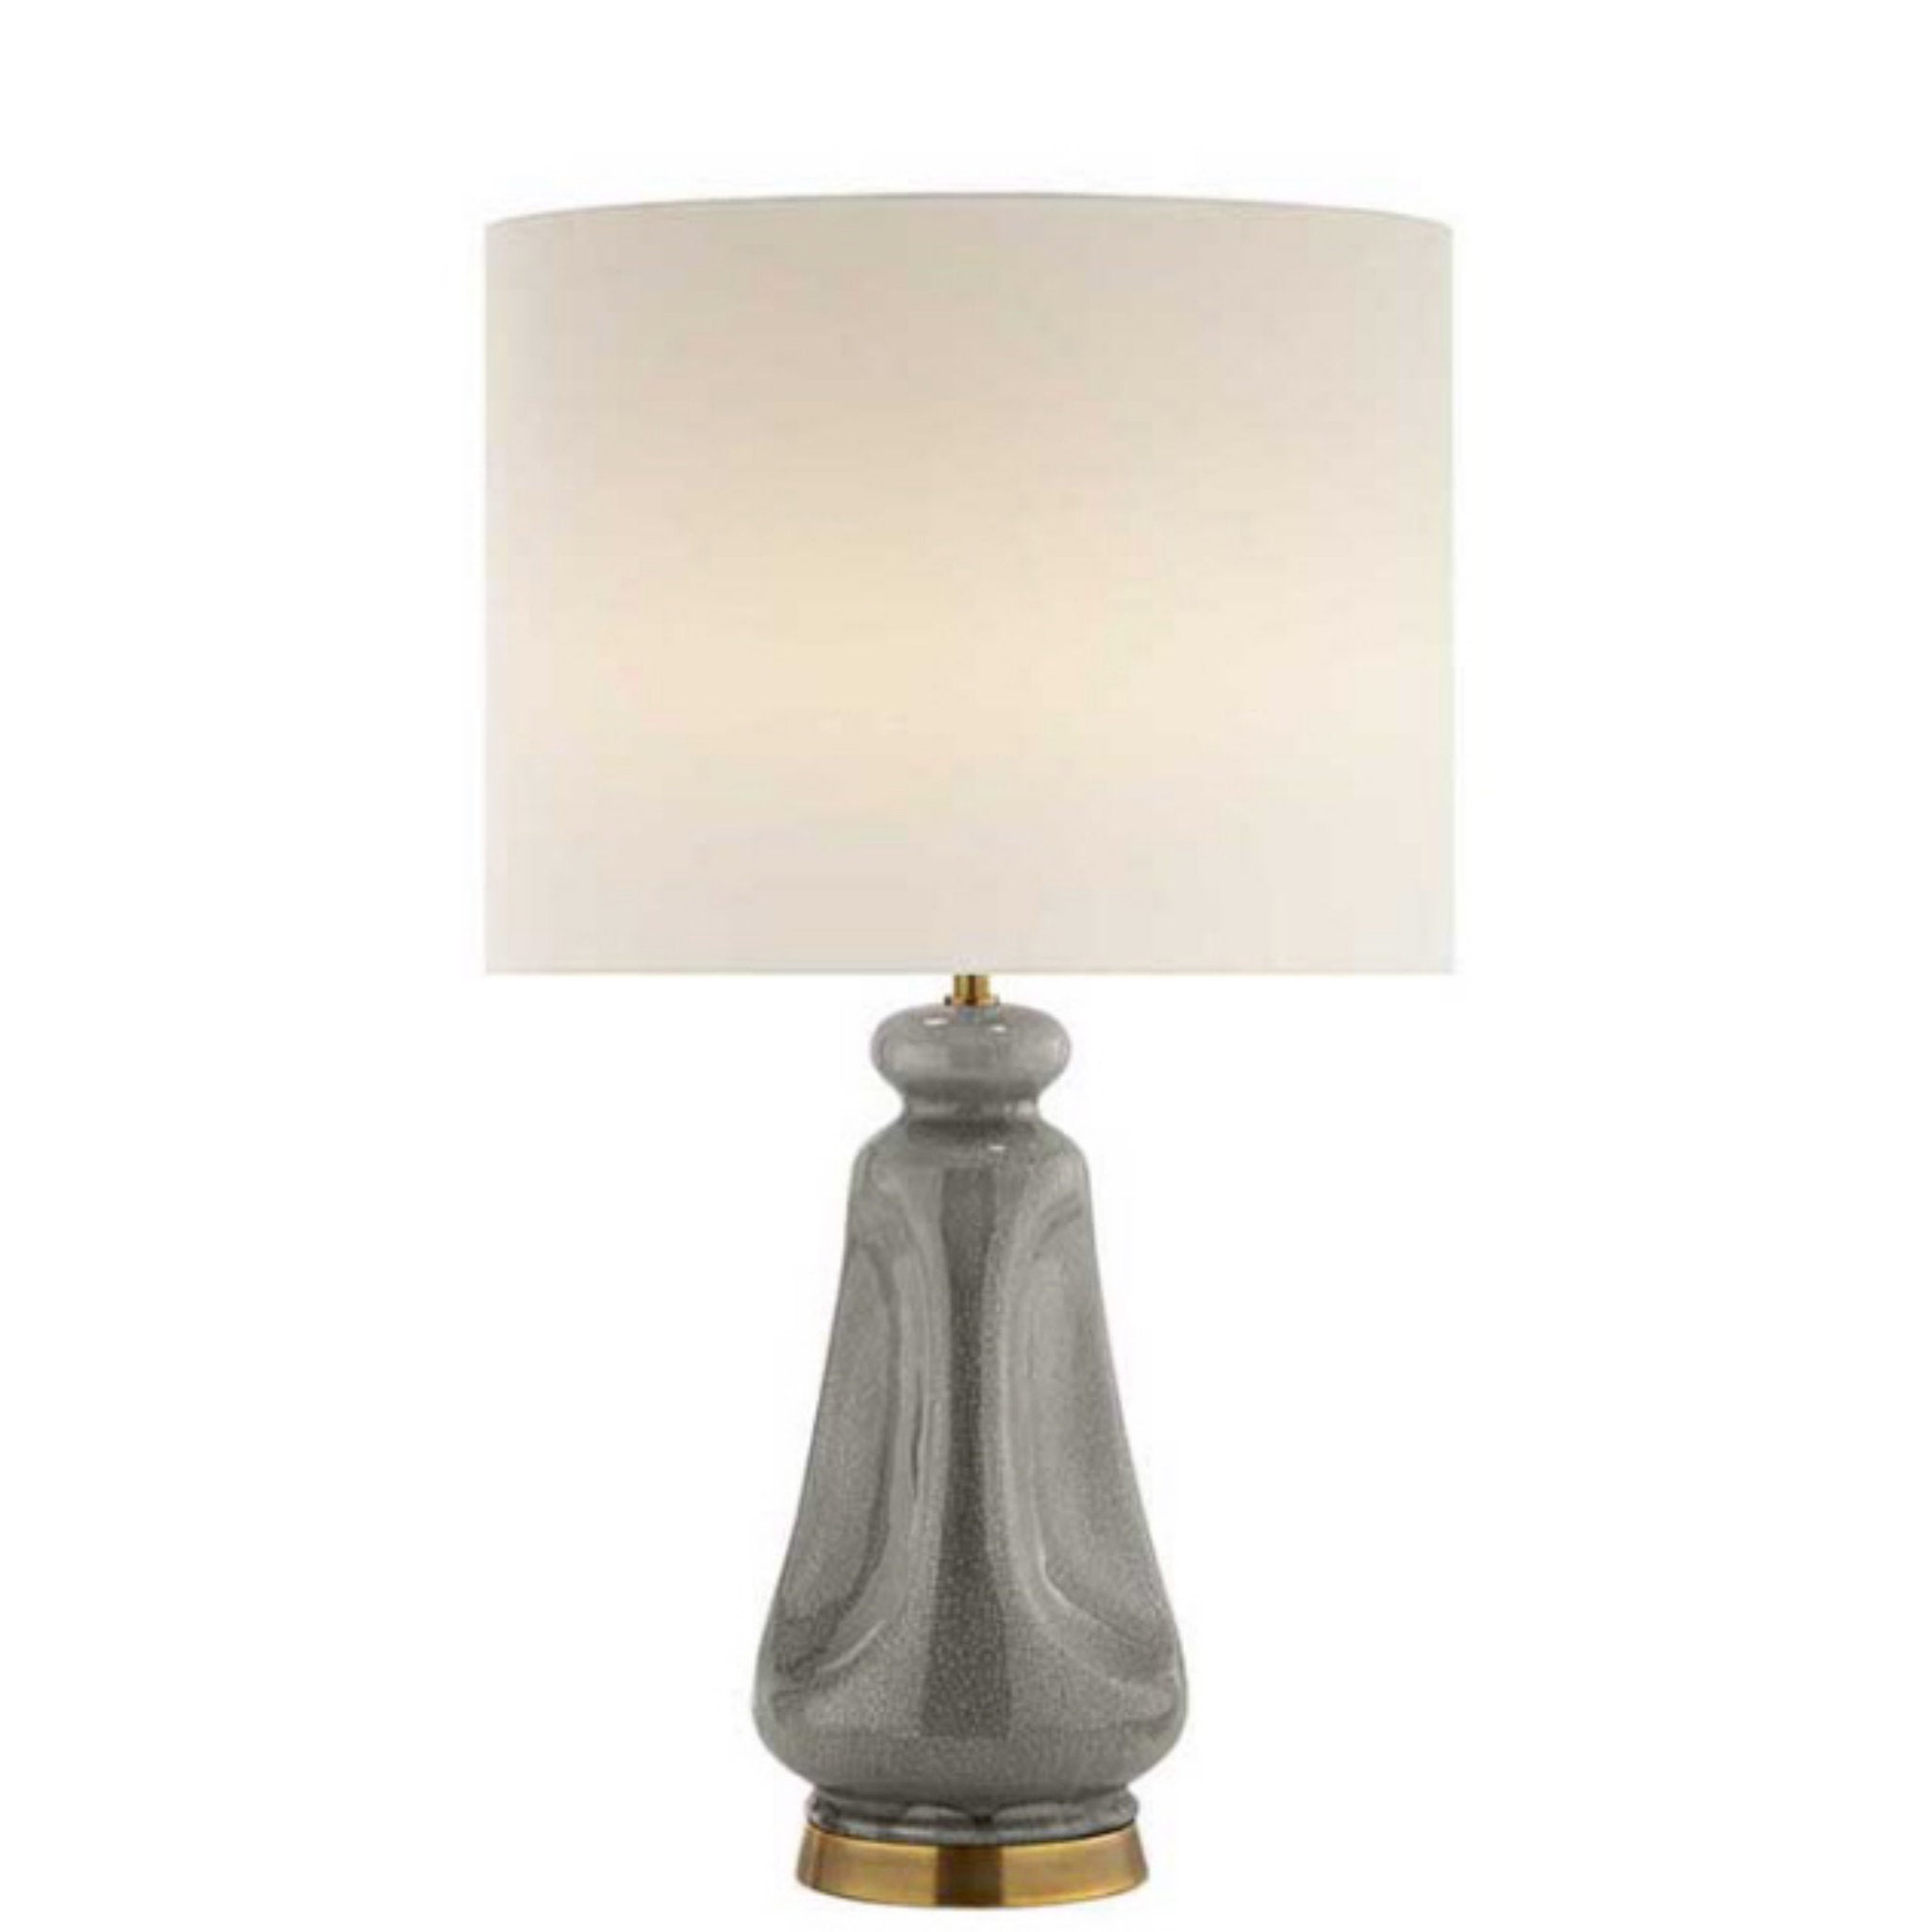 AERIN Kapila Table Lamp in Shellish Gray with Linen Shade